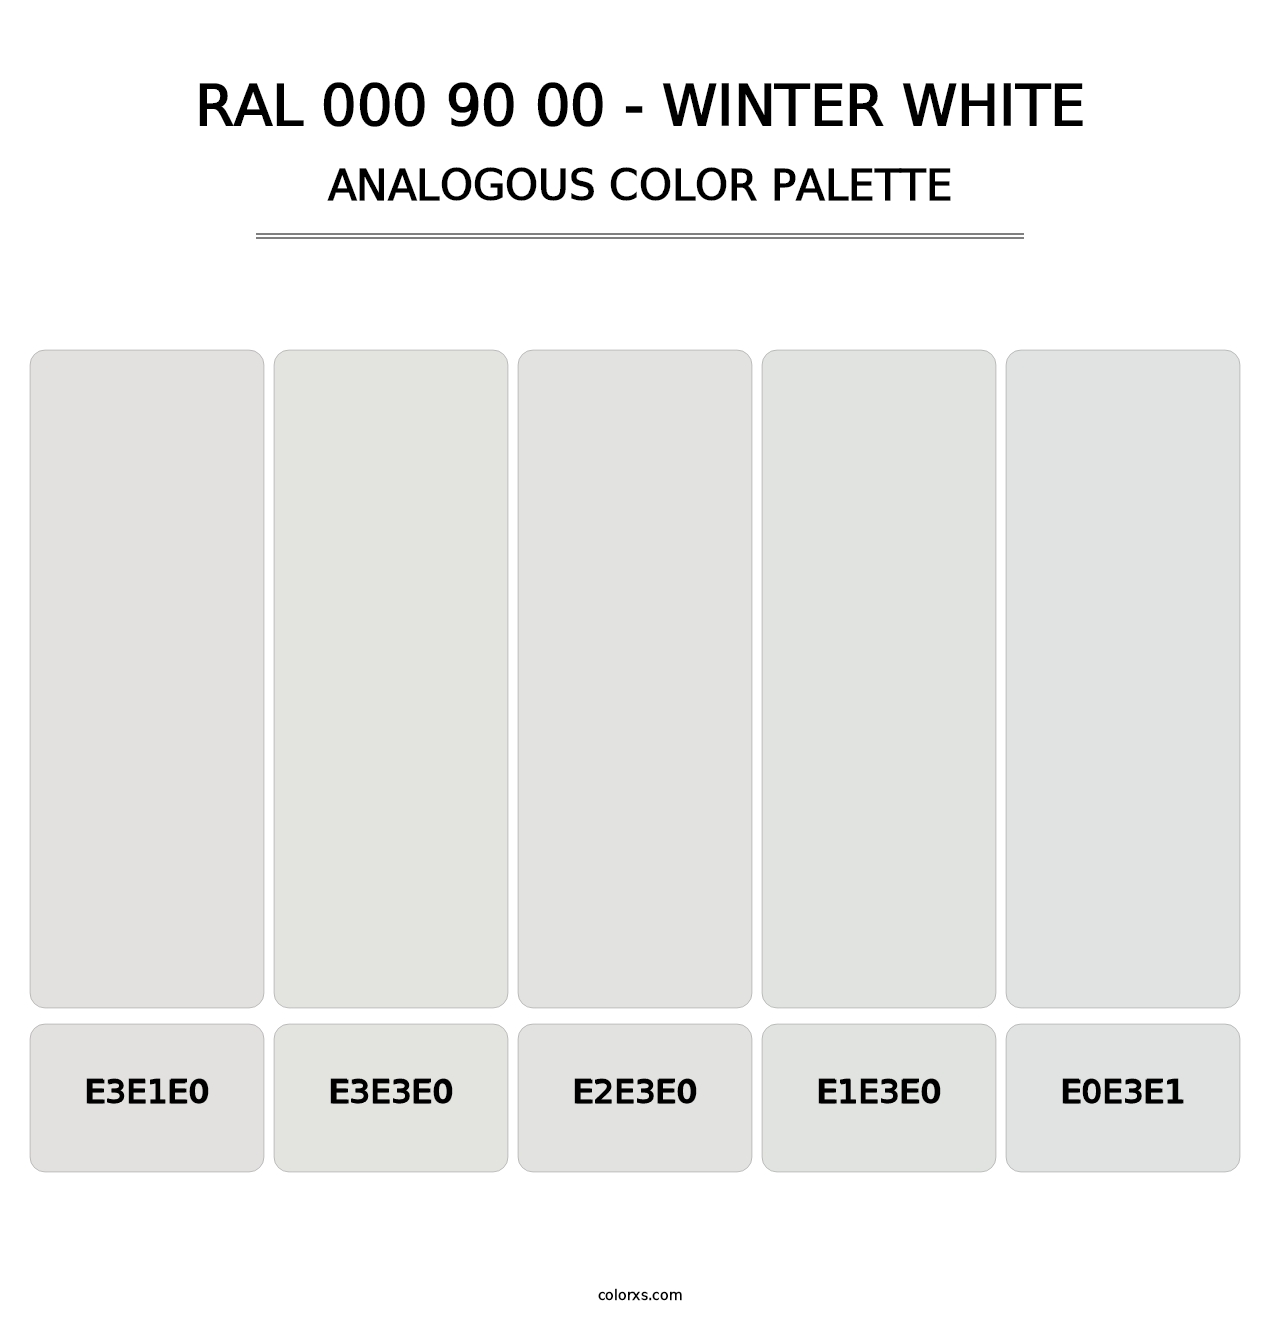 RAL 000 90 00 - Winter White - Analogous Color Palette